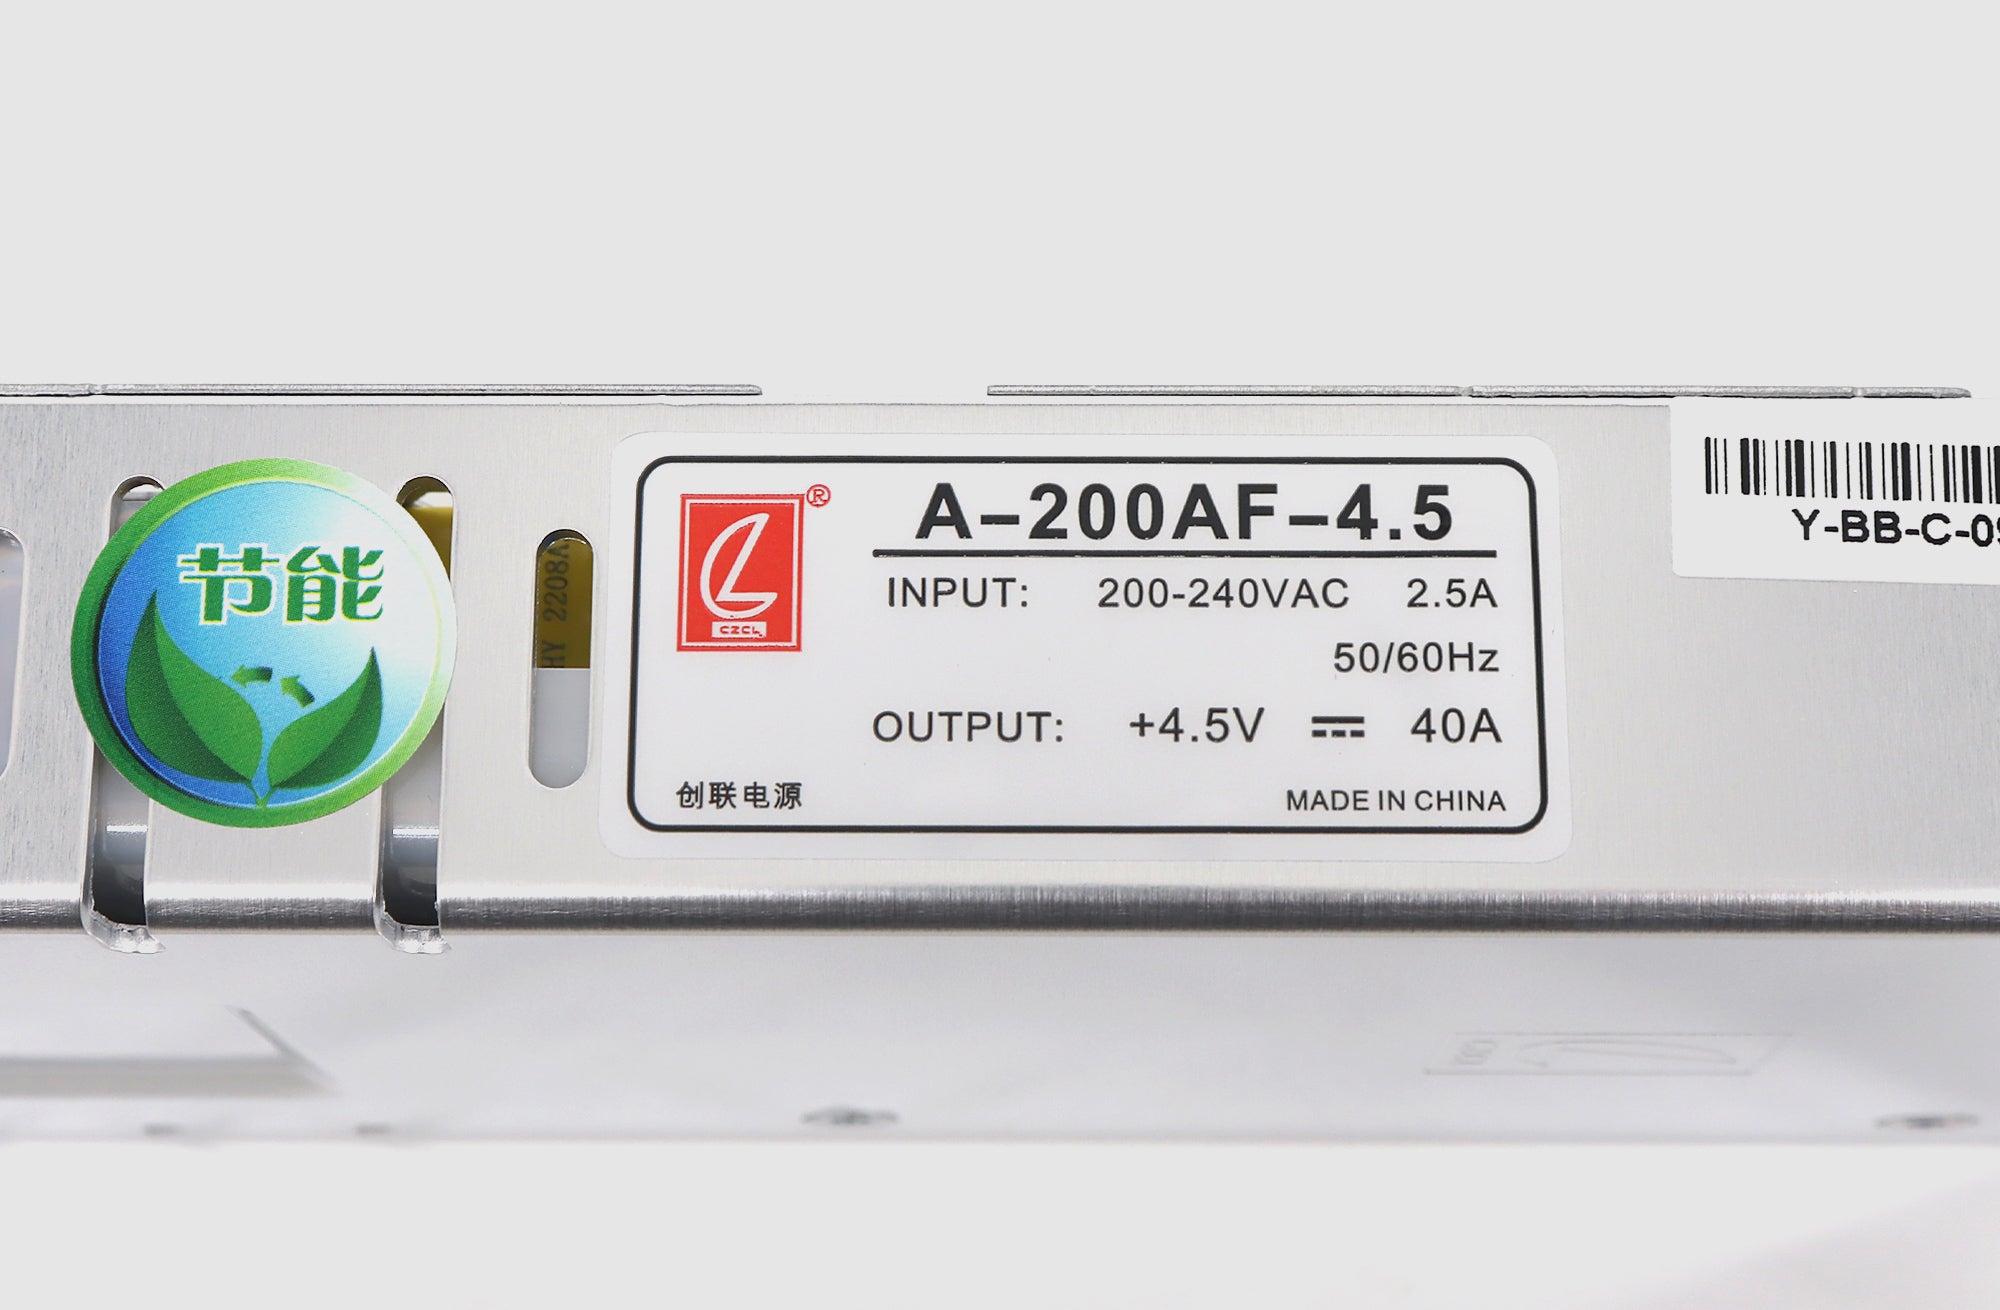 CZCL A-200AF-4.5 Low Profile LED Power Supply